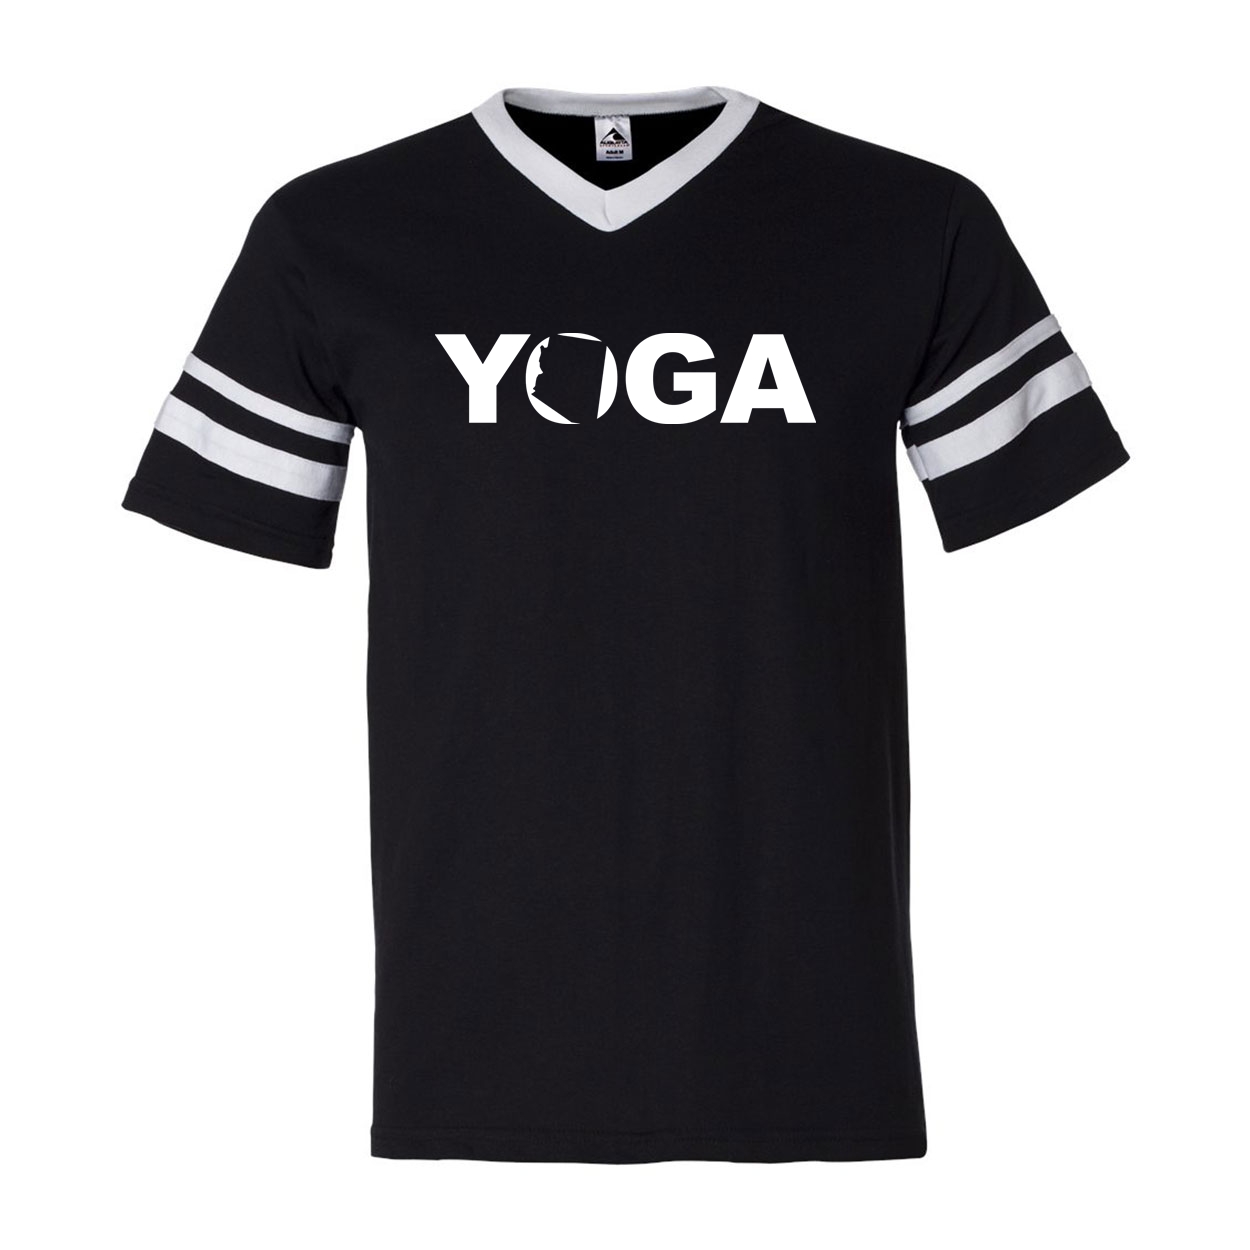 Yoga Arizona Classic Premium Striped Jersey T-Shirt Black/White (White Logo)